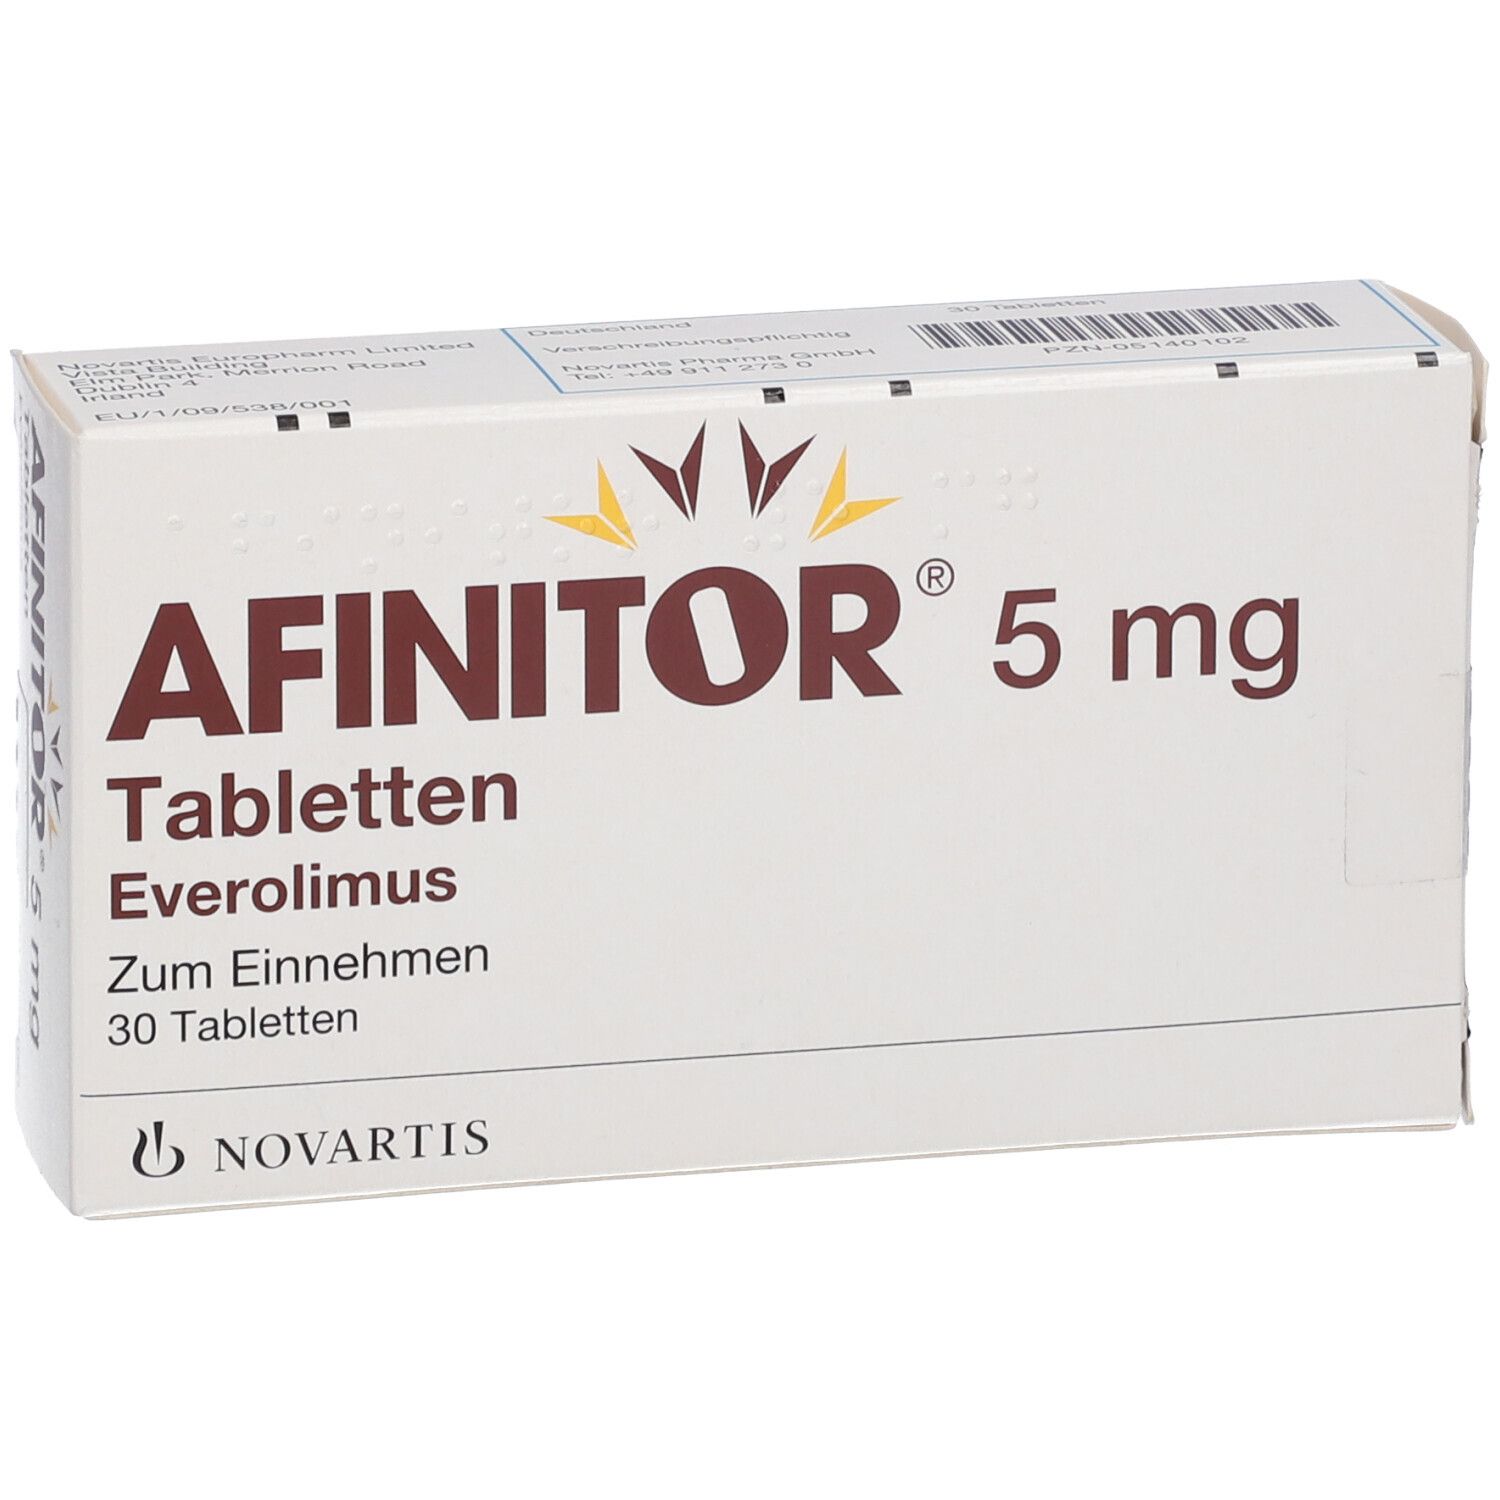 AFINITOR® 5 mg